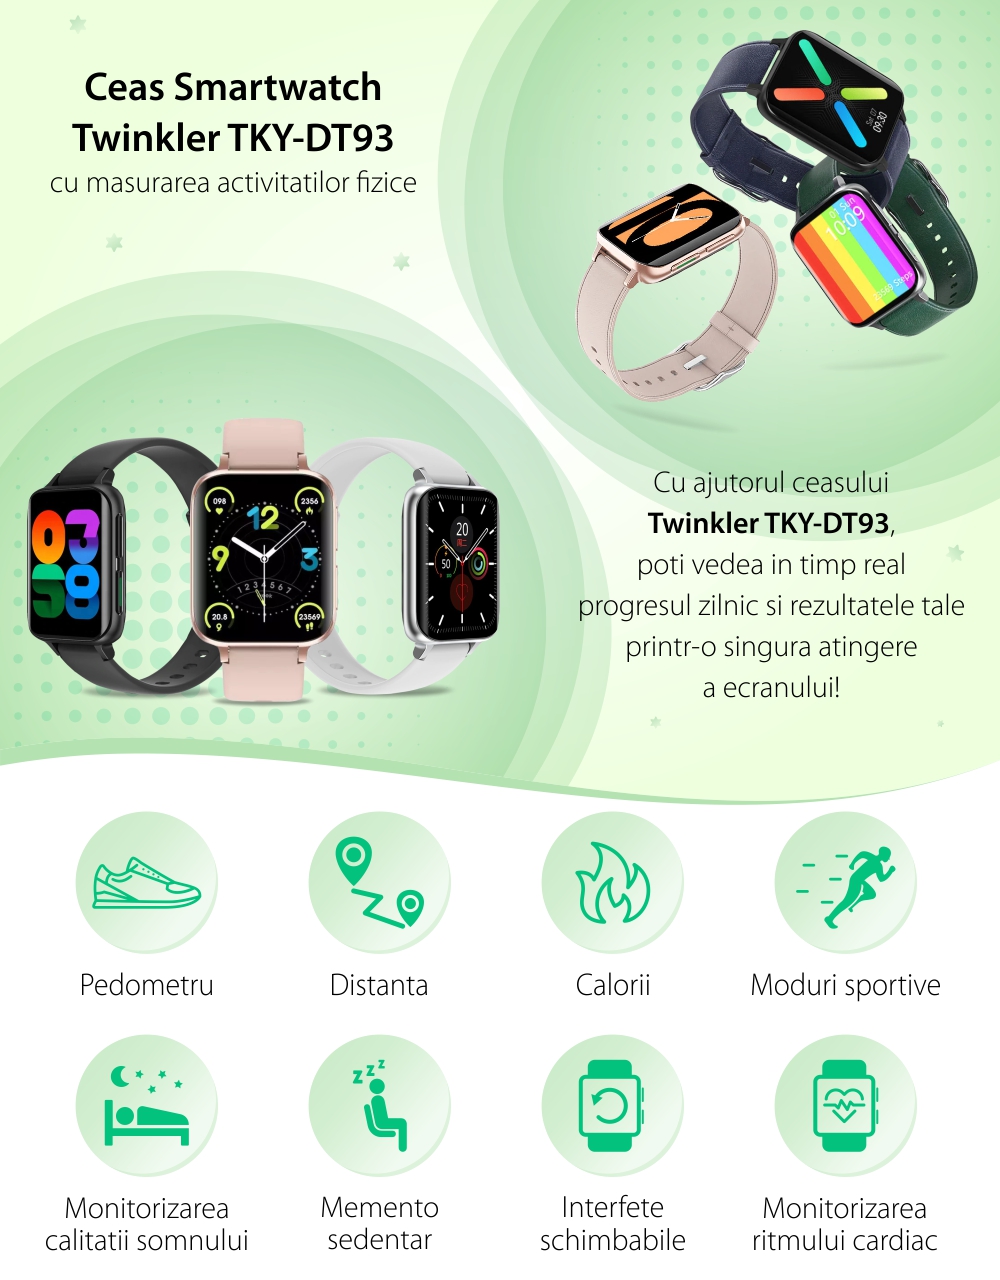 Ceas smartwatch Twinkler TKY-DT93, Bratara silicon, Roz cu ECG, Tensiune arteriala, Ritm cardiac, Oxigen din sange, Interfata custom, Memento sedentar, Monitorizarea somnului, Pedometru, Moduri sportive